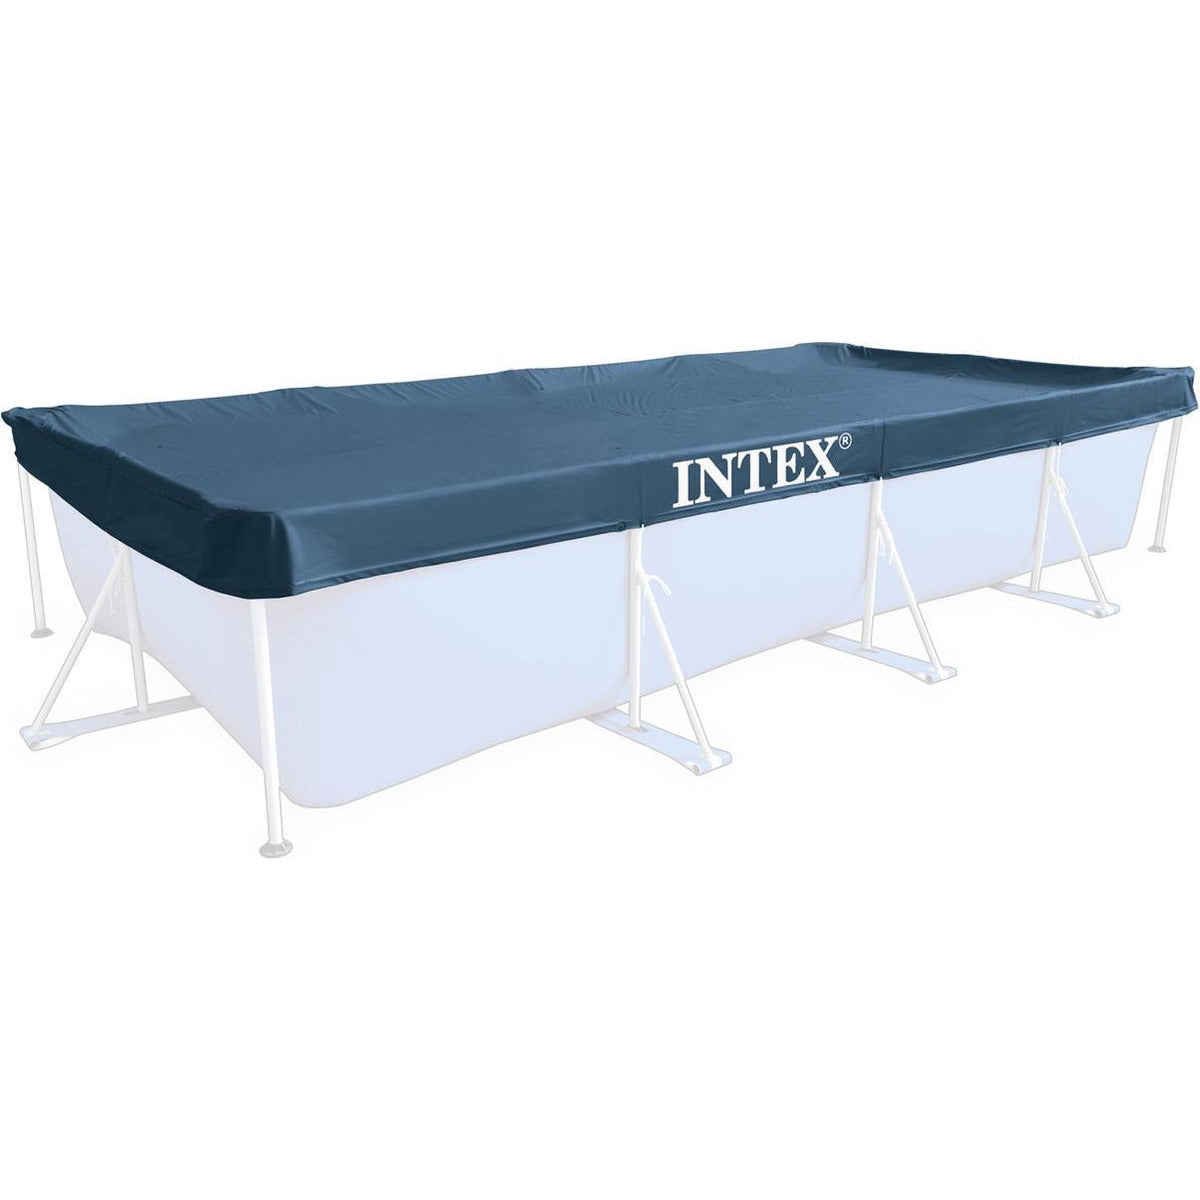 Intex Demple Seaction Pool 450 x 220